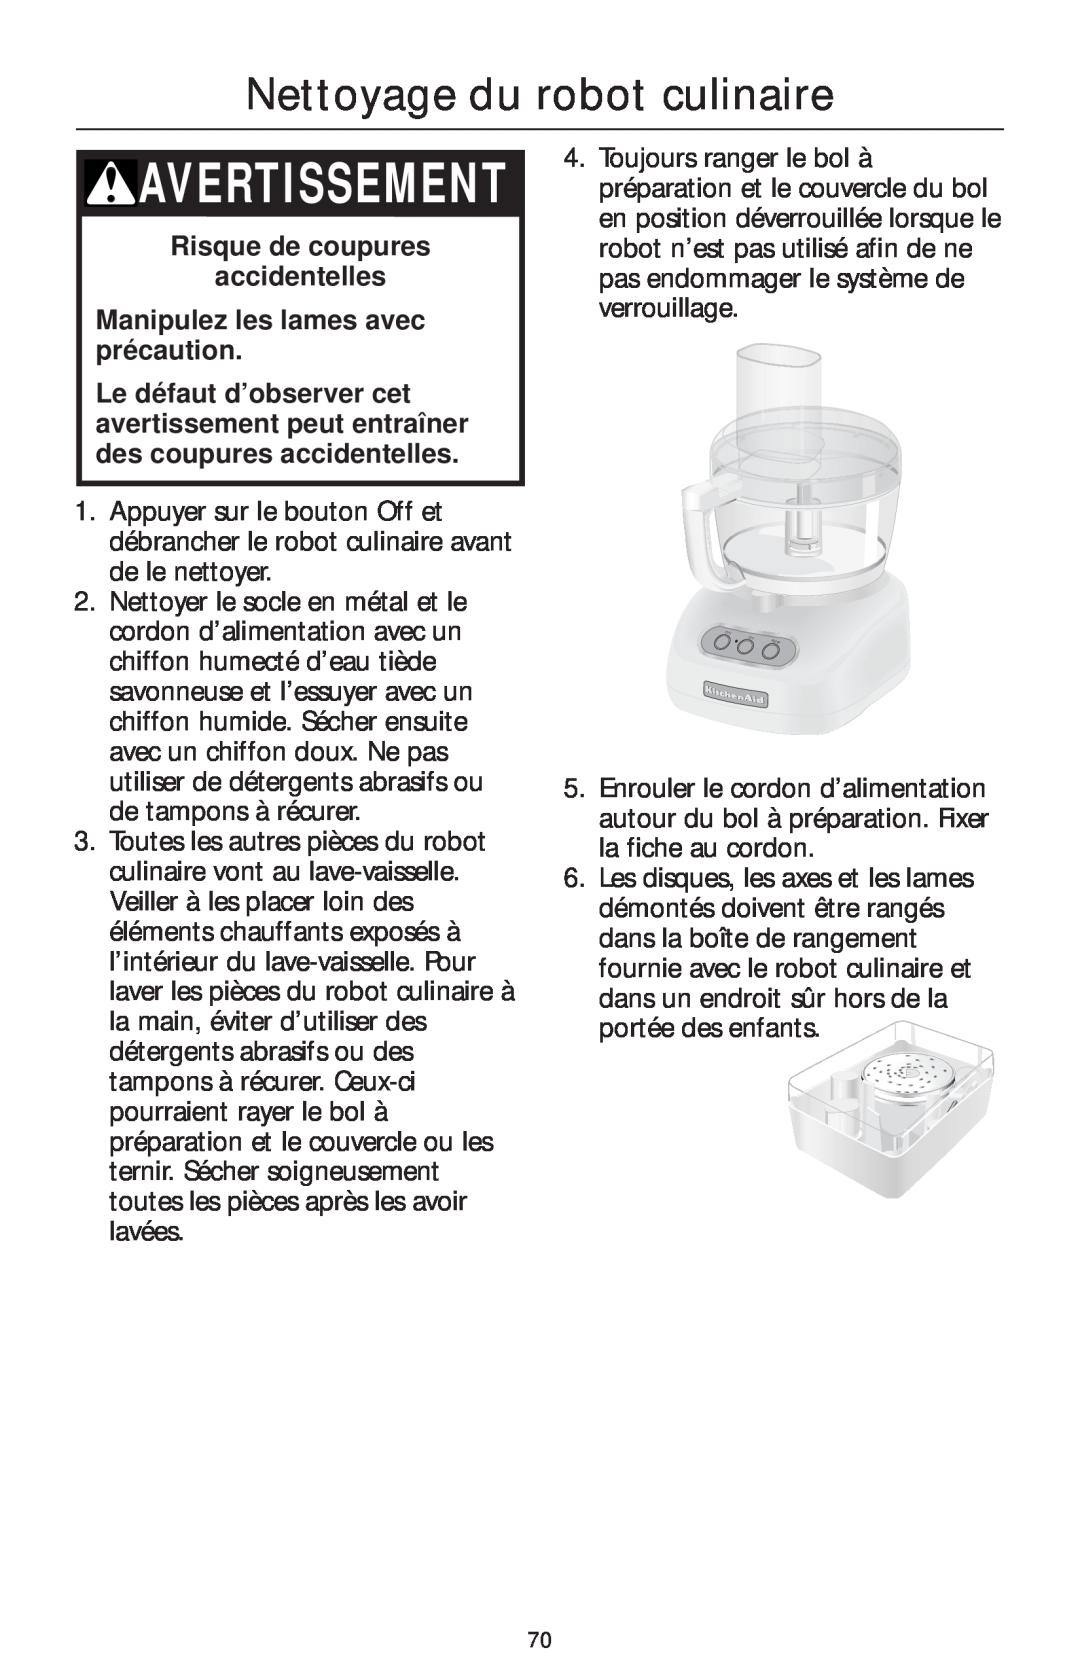 KitchenAid 4KFP750 manual Nettoyage du robot culinaire, Avertissement 